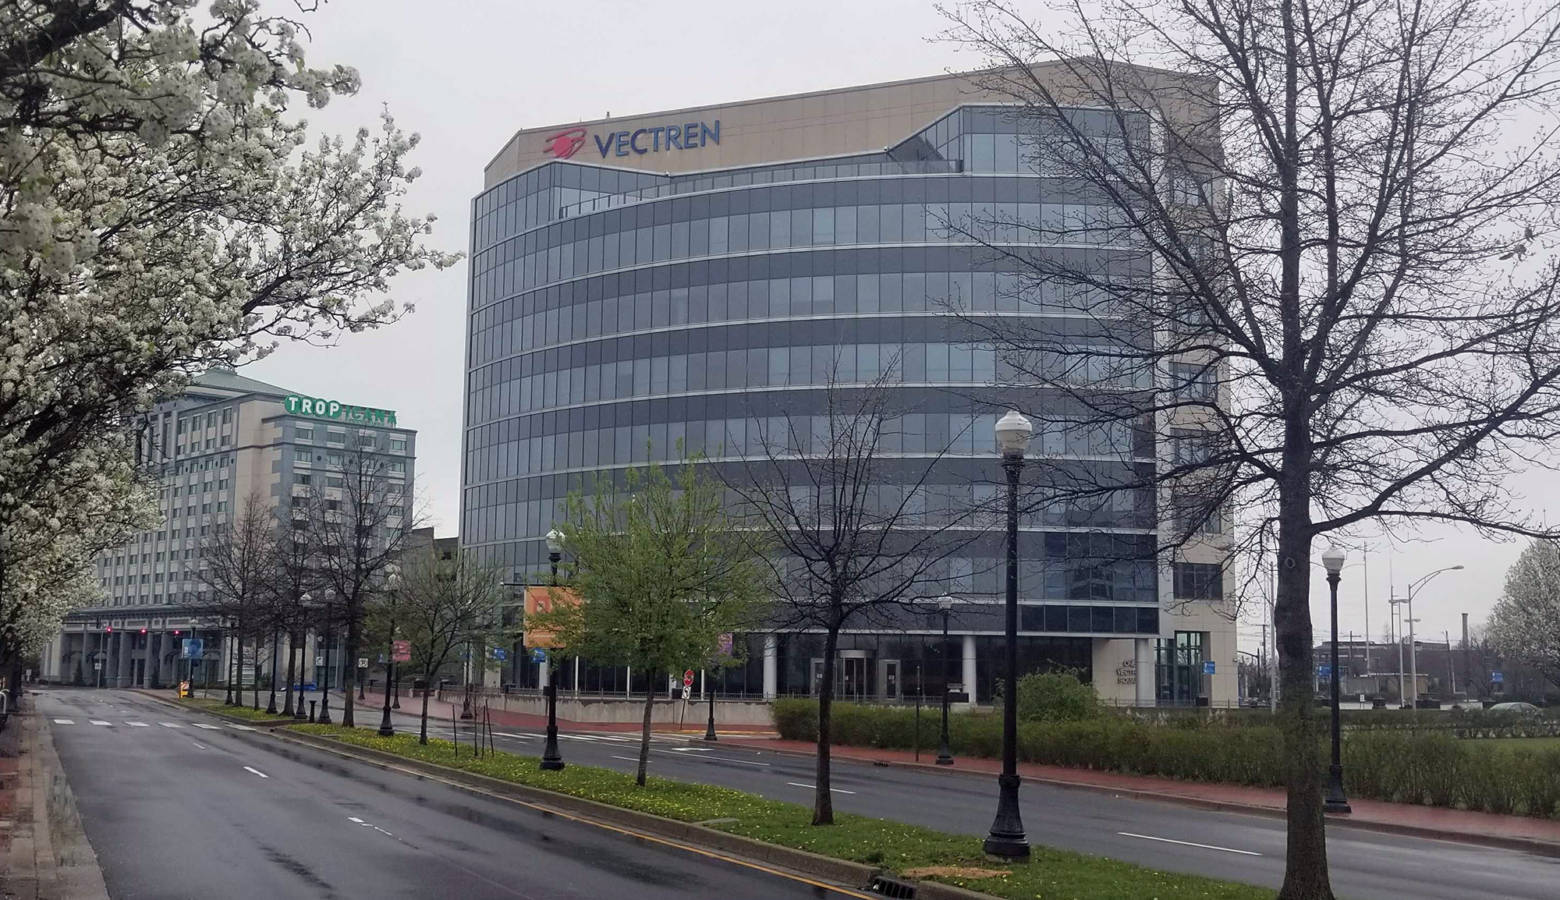 Vectren's headquarters in Evansville. (Samantha Horton/IPB News)